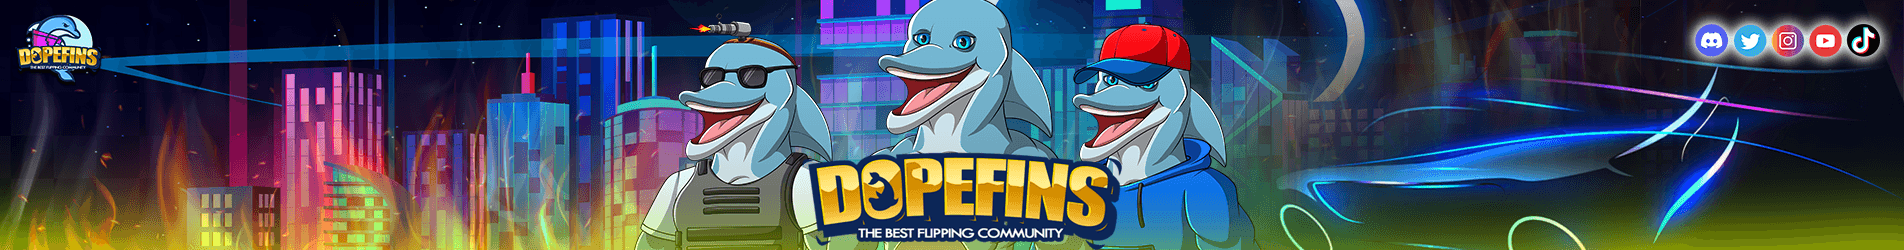 Dopefins 橫幅